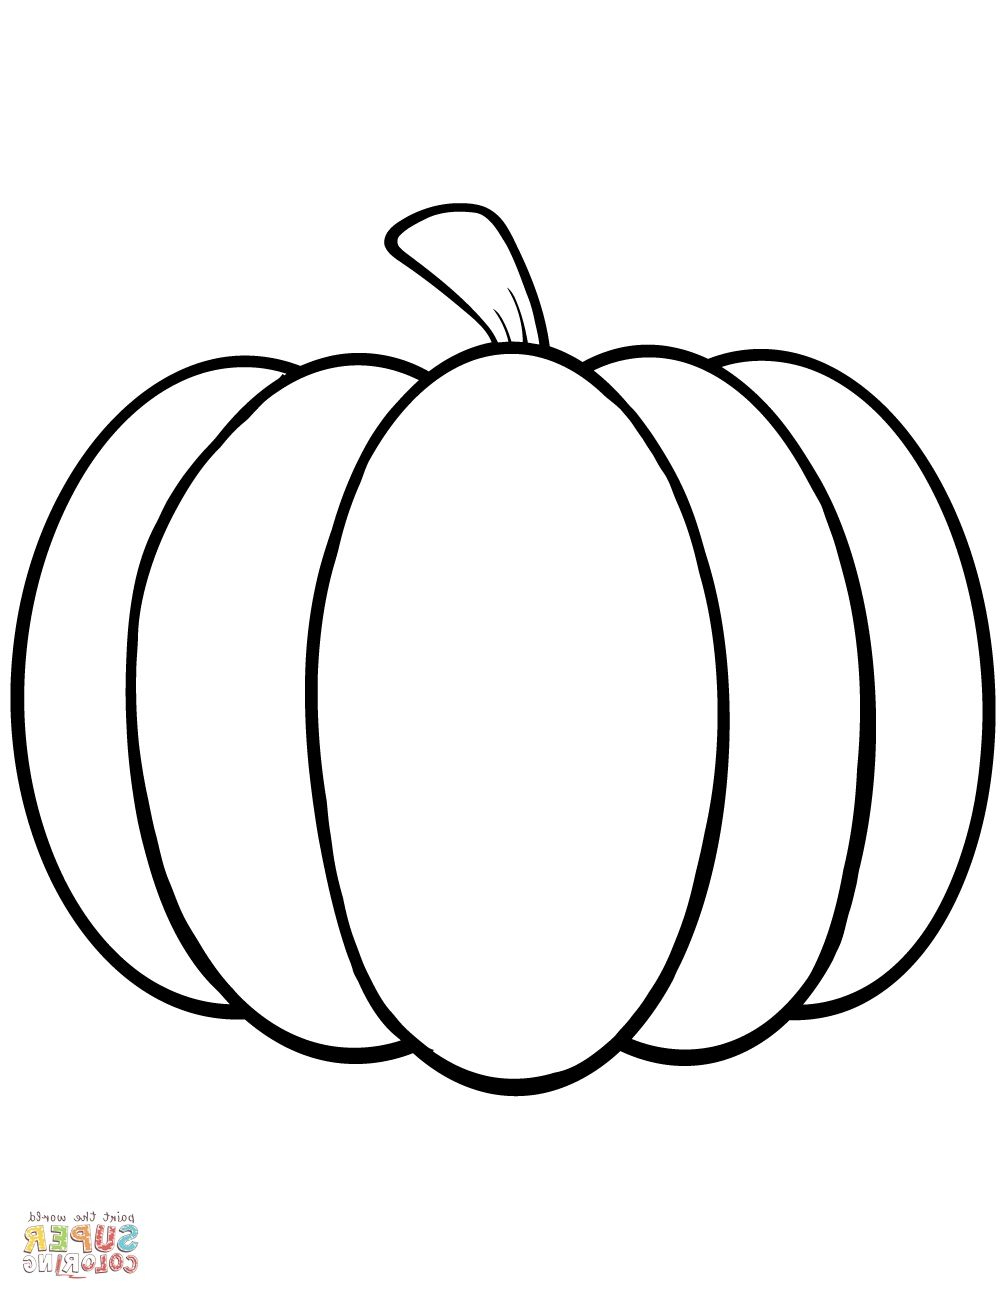 Pumpkin Coloring Pages | Coloring Page | Pinterest | Pumpkin - Free Printable Pumpkin Coloring Pages